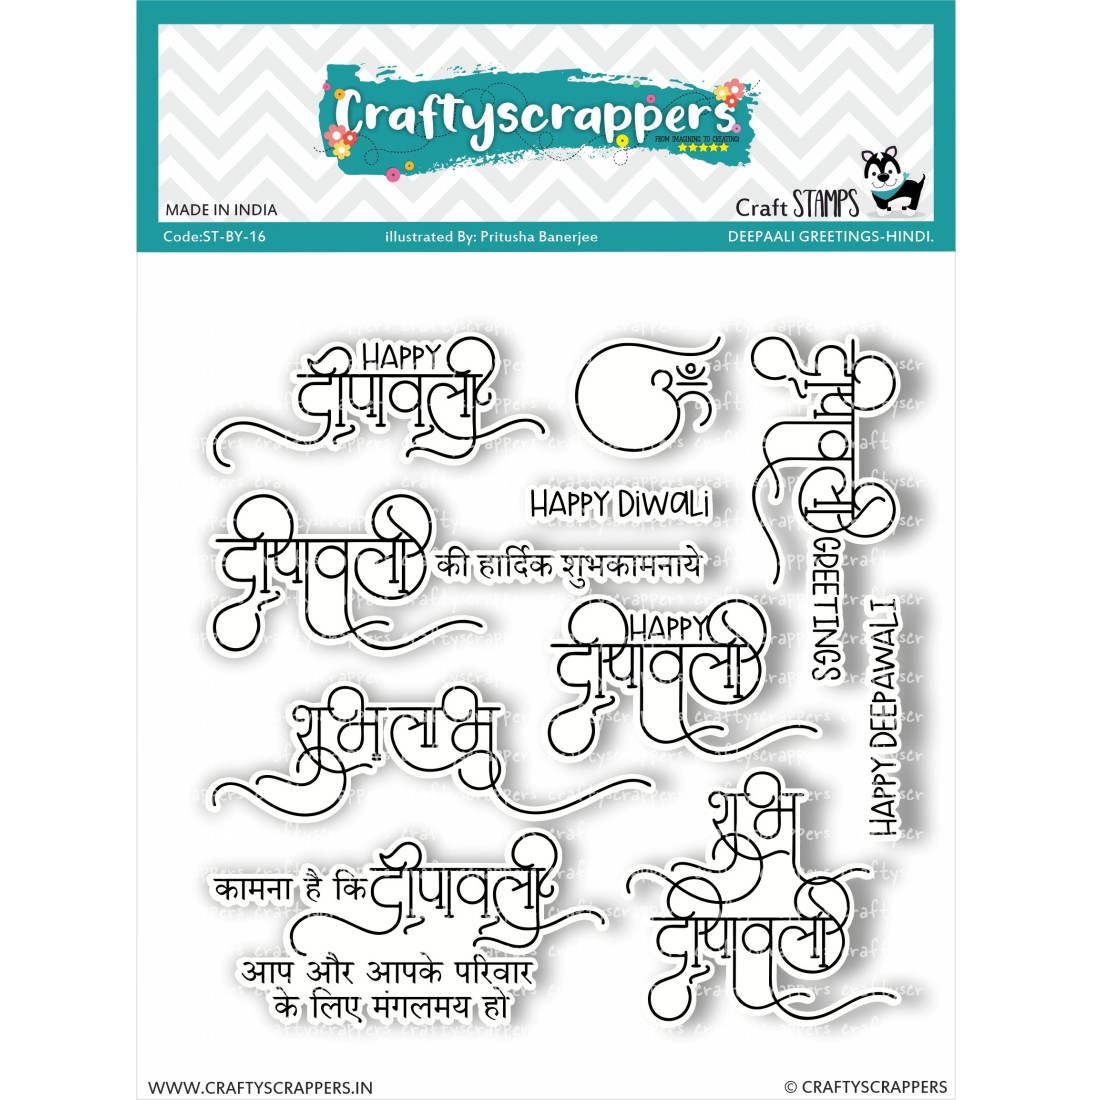 Craftyscrappers Stamps- DEEPAWALI GREETINGS-HINDI